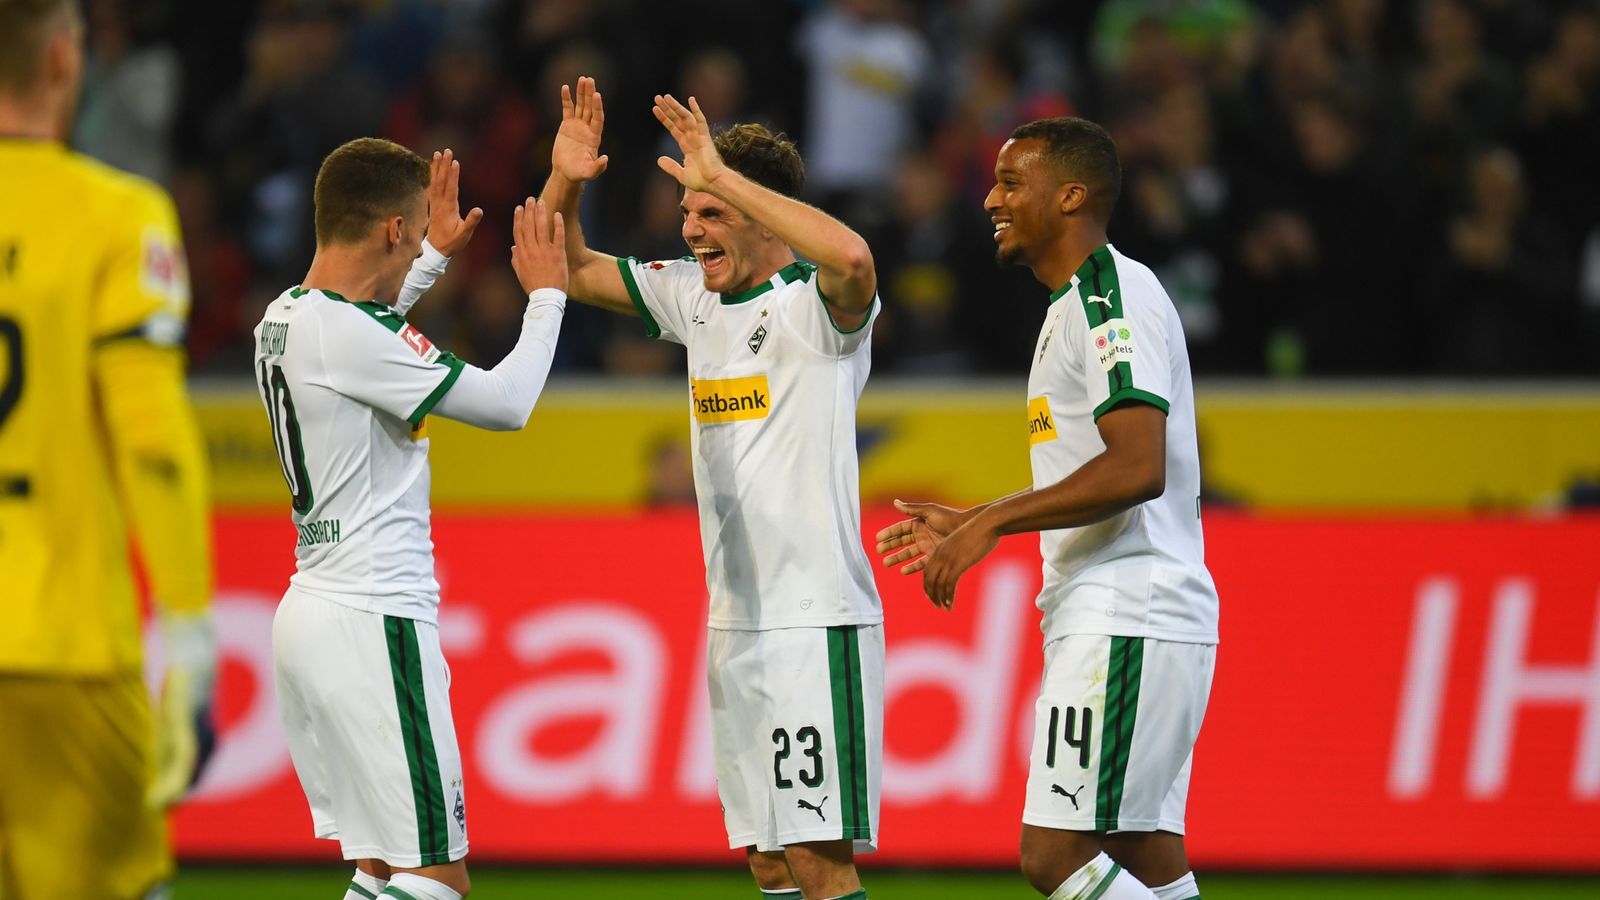 Borussia Mönchengladbach has raised qualification expectations in their UEFA Champions League